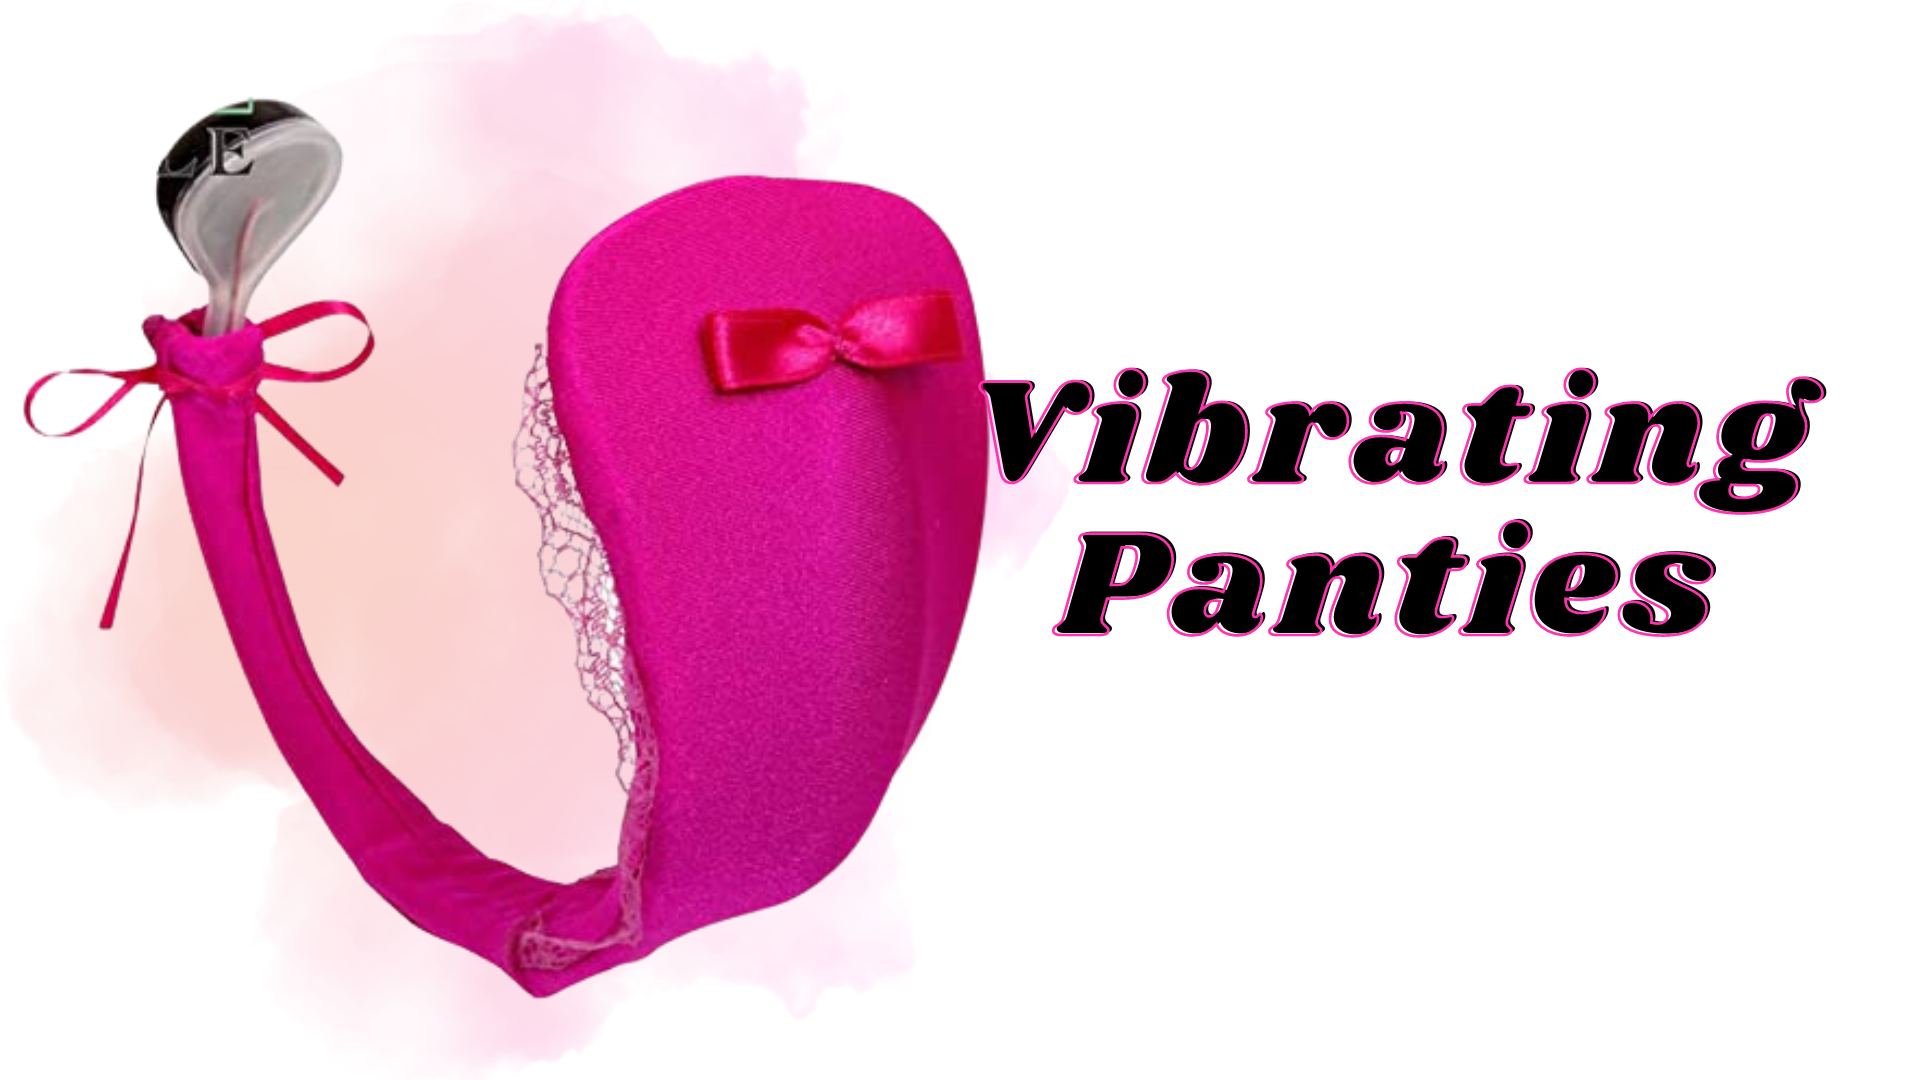 A pink vibrating Panty